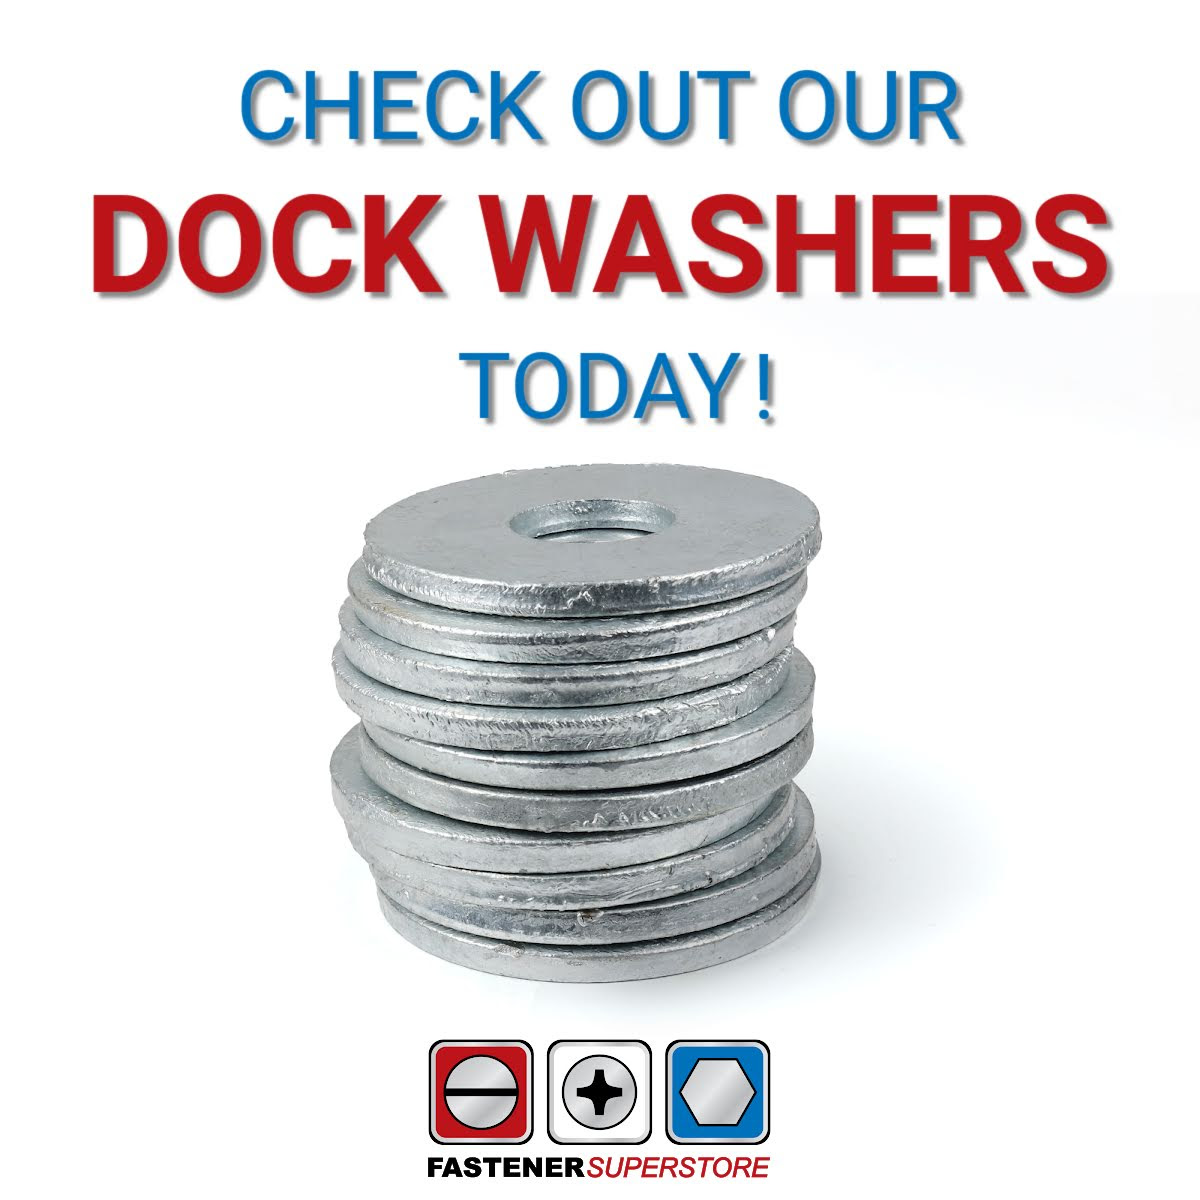 Dock Washers at Fastener SuperStore